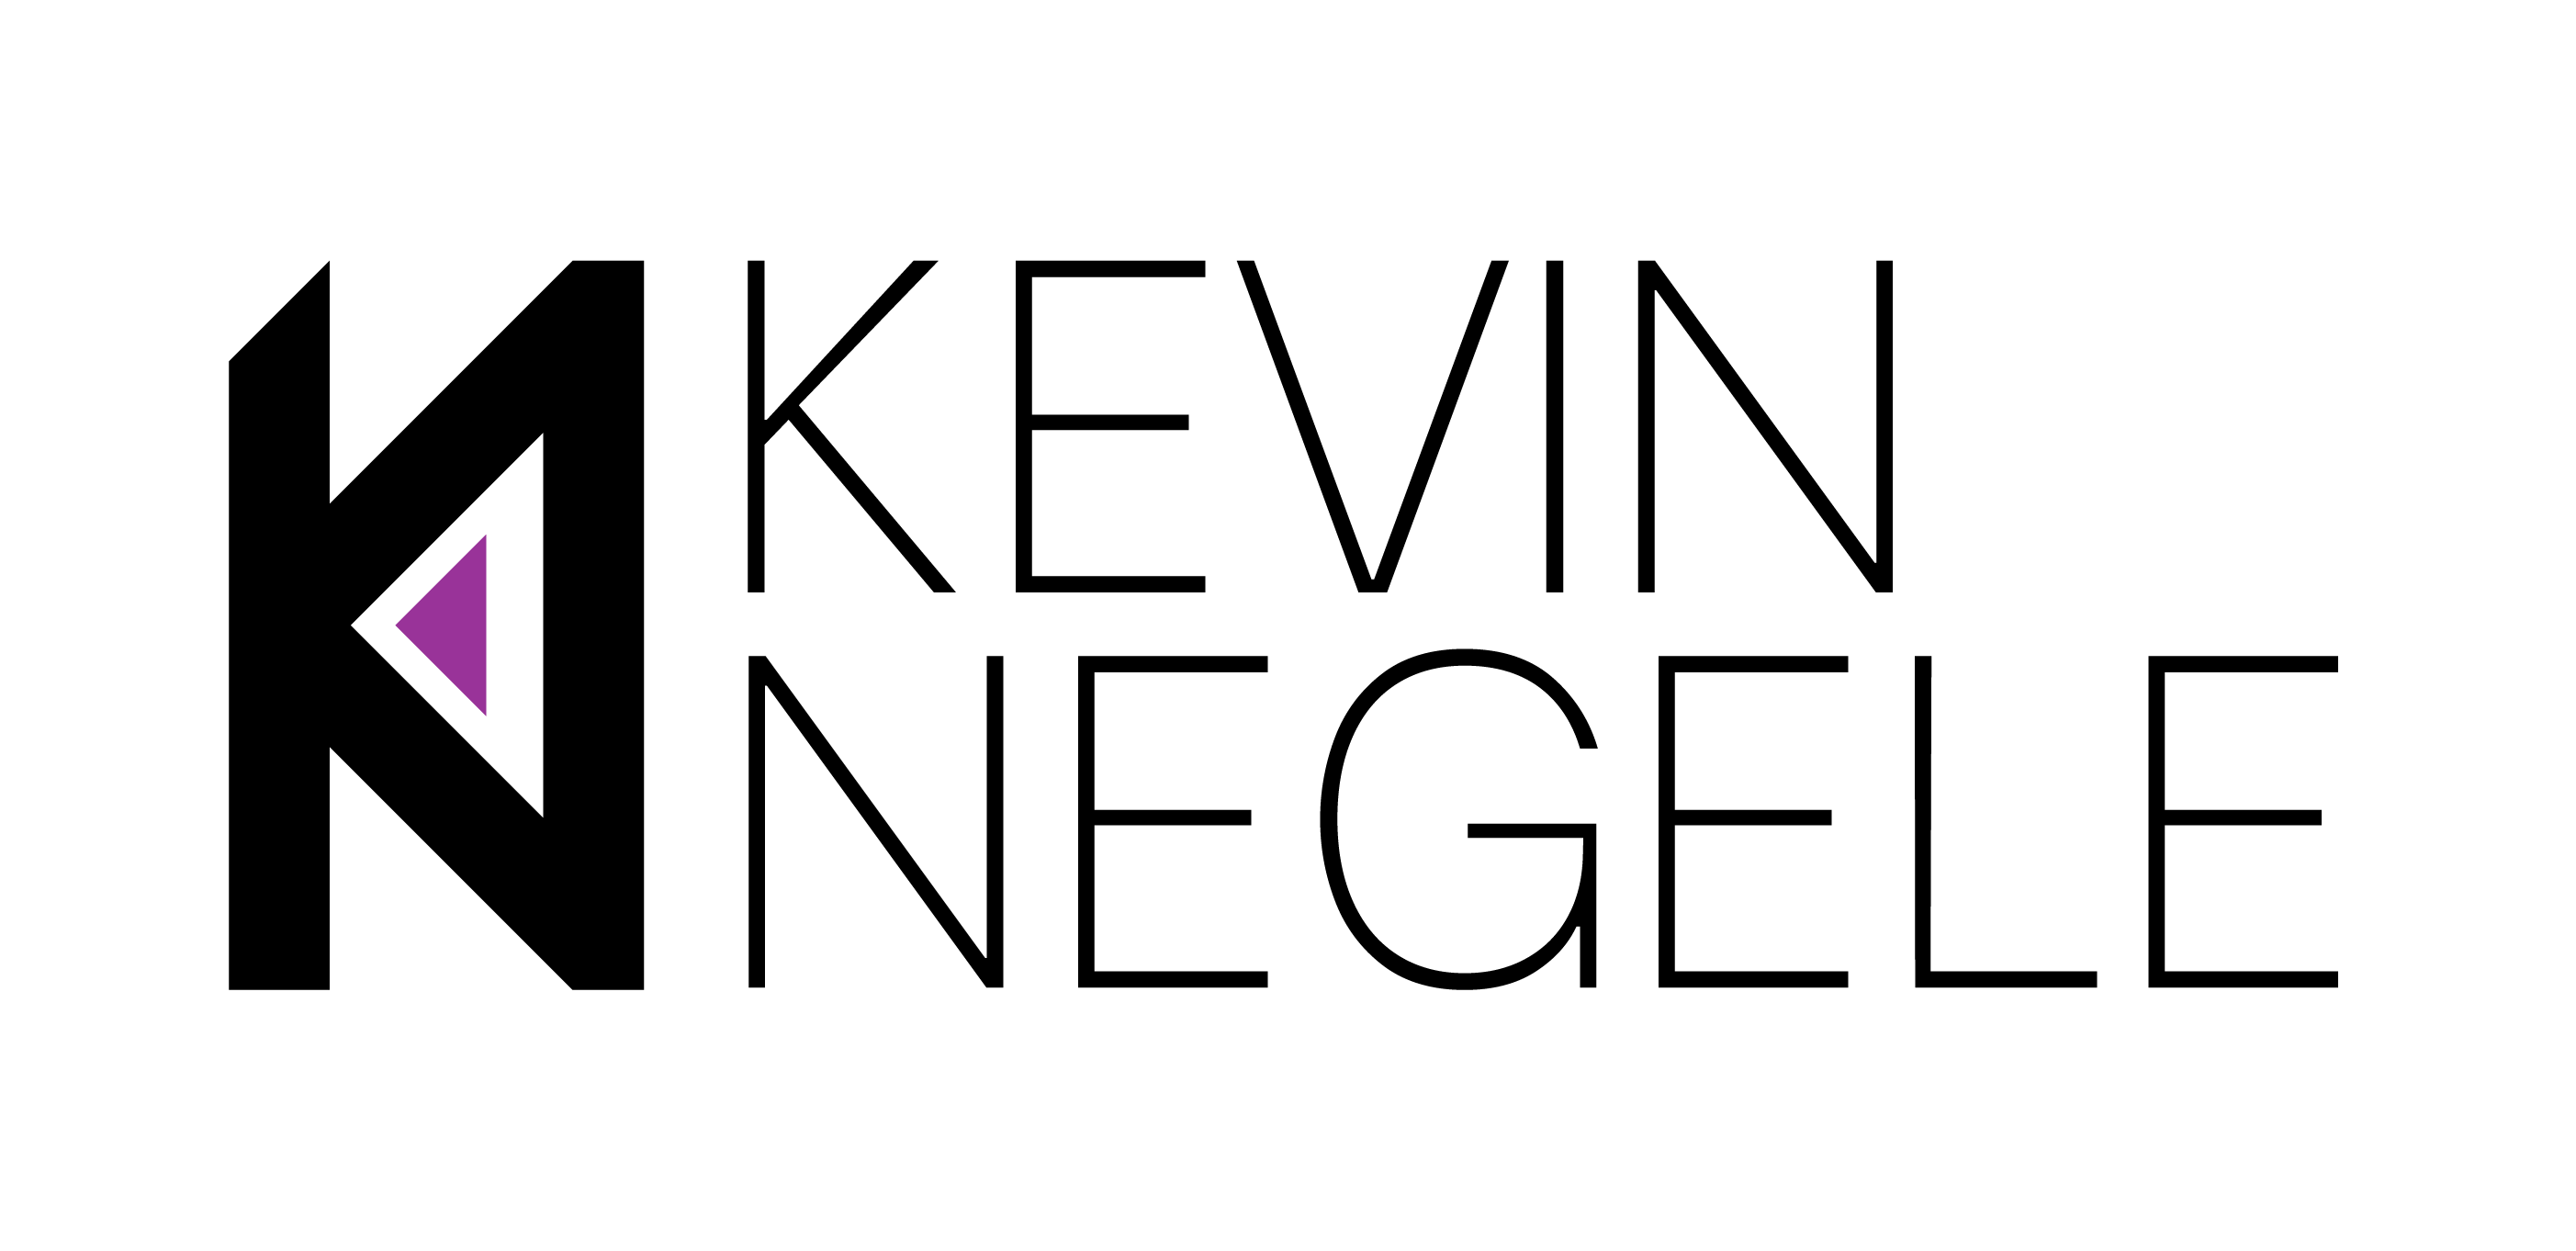 Kevin Negele